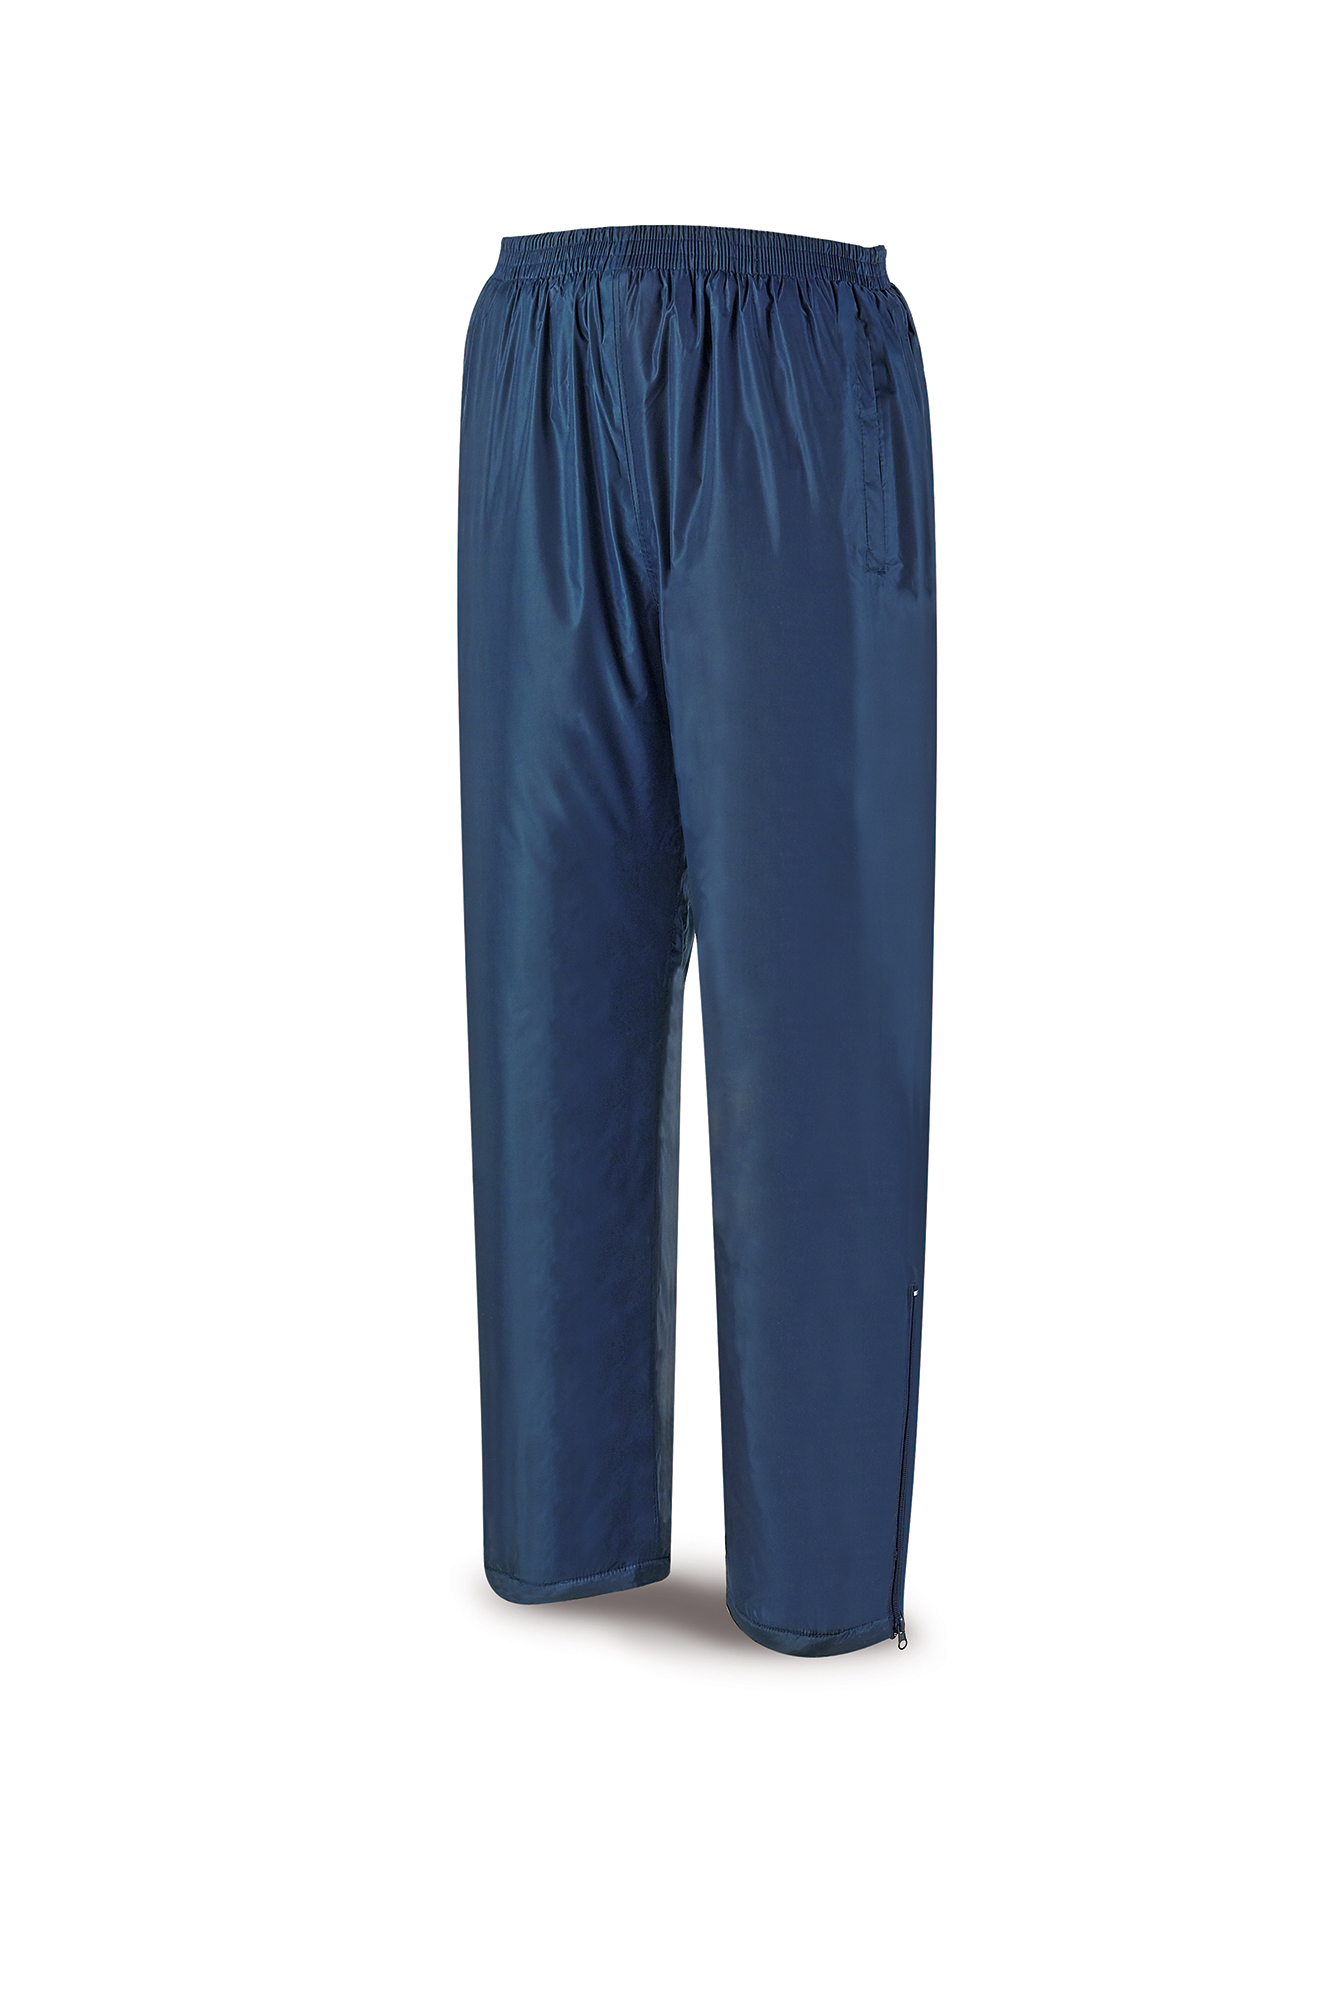 288-PANA Abrigo y lluvia Pantalones Pantalón azul marino modelo URANO.